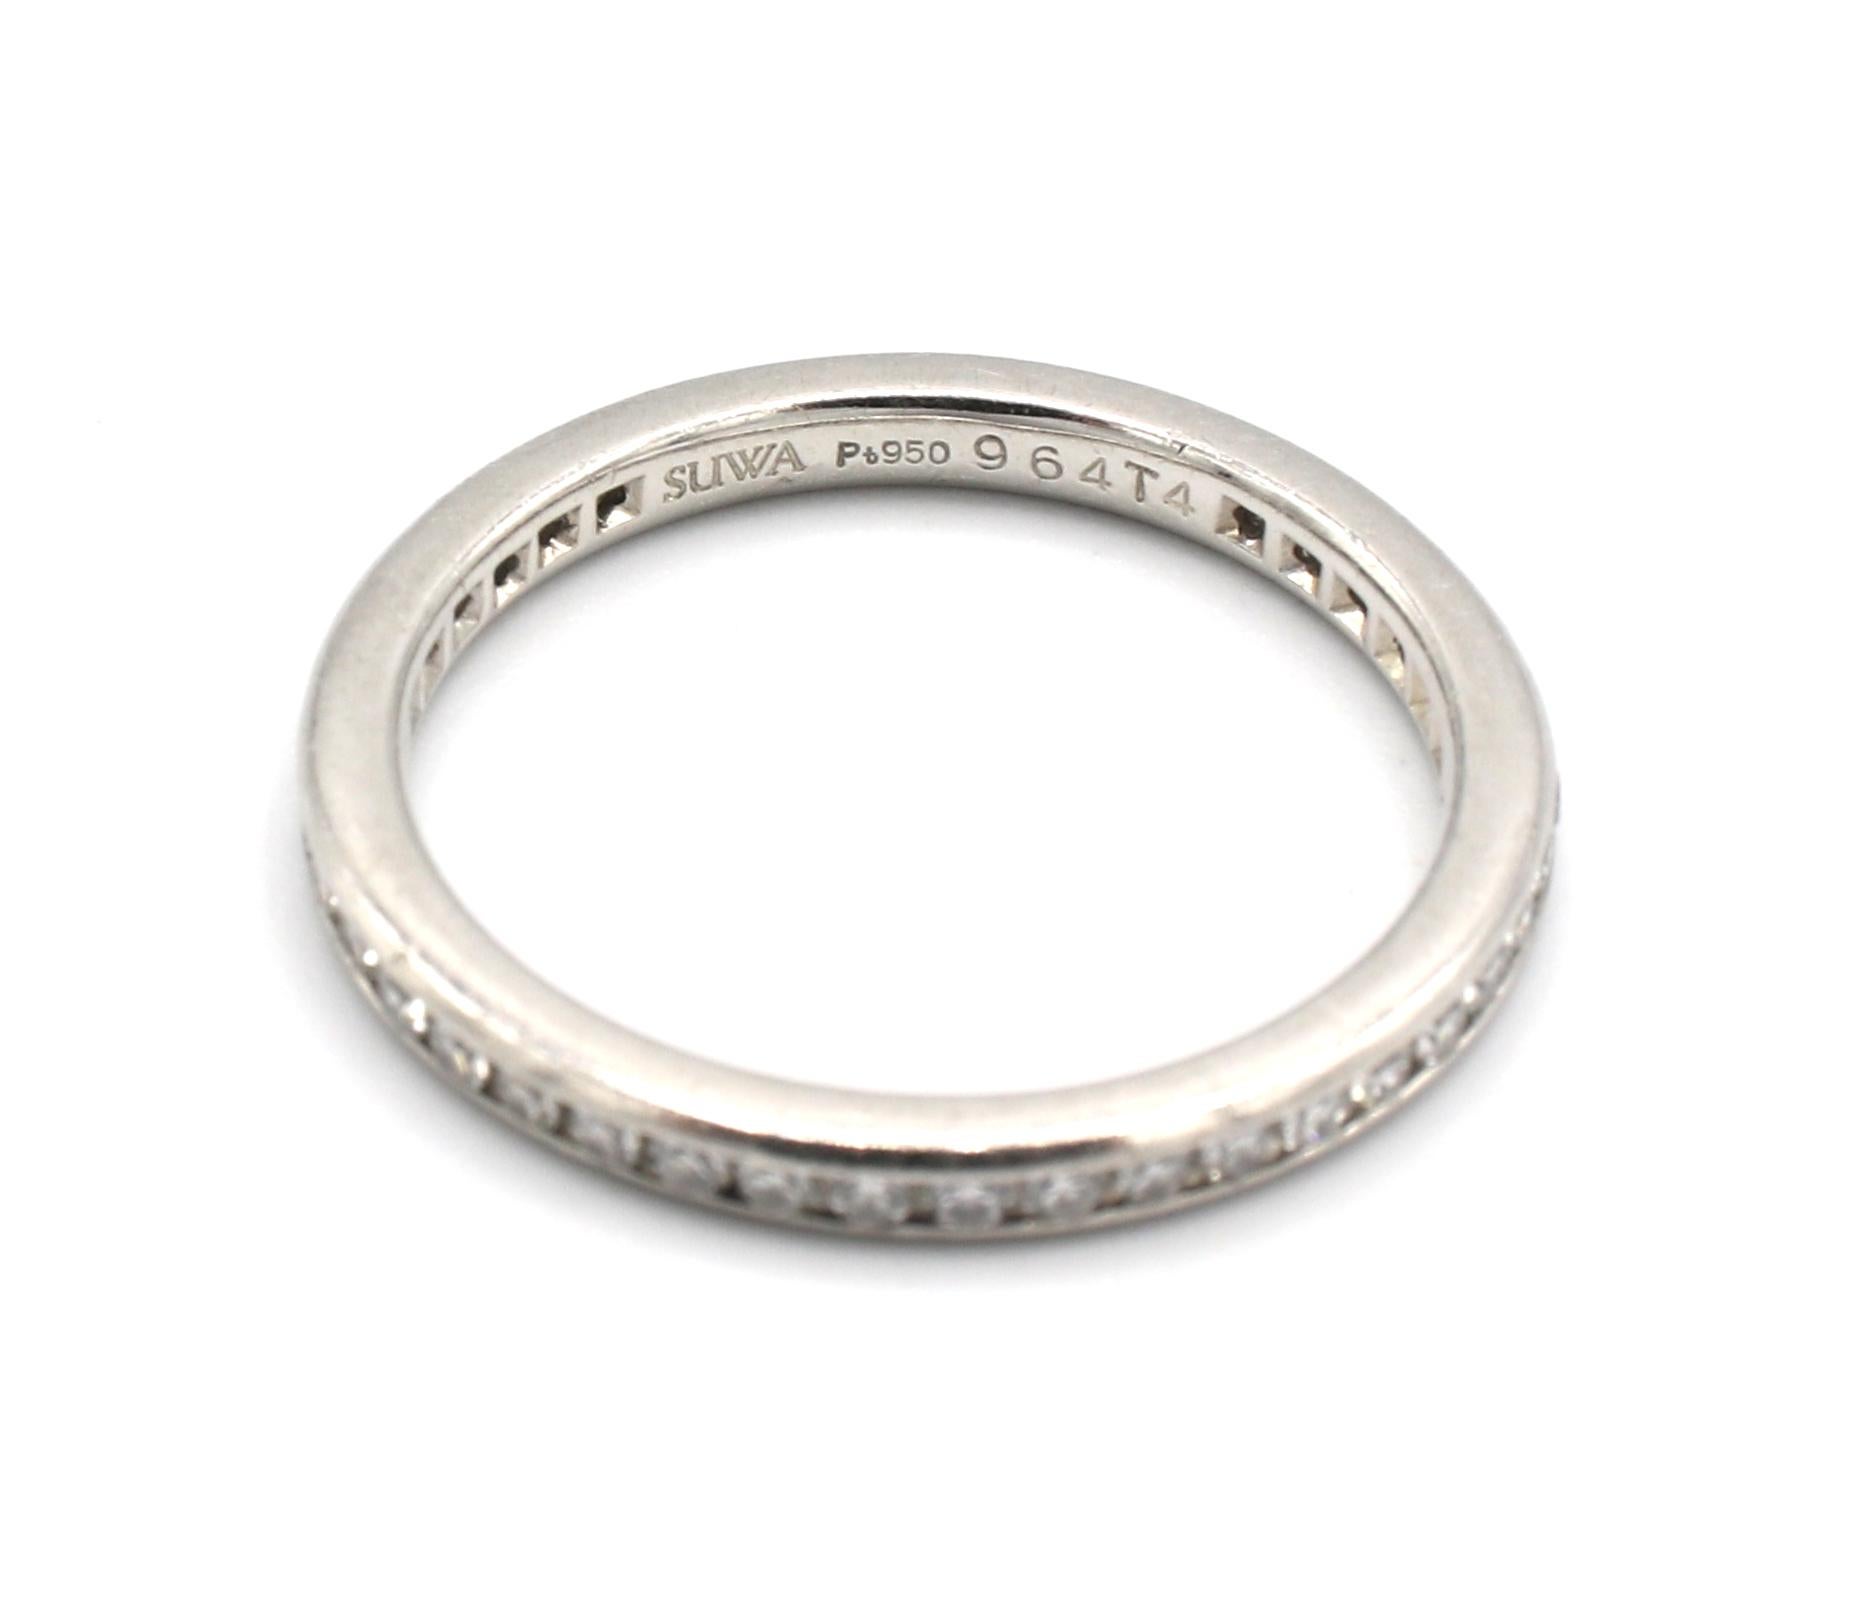 SUWA Platinum .25 Carat Diamond Eternity Band Ring 
Metal: Platinum
Weight: 2.63 grams
Diamonds: Approx. 0.25 carat single cut diamonds G VS
Size: 5 (US)
Width: 2mm
Box included 